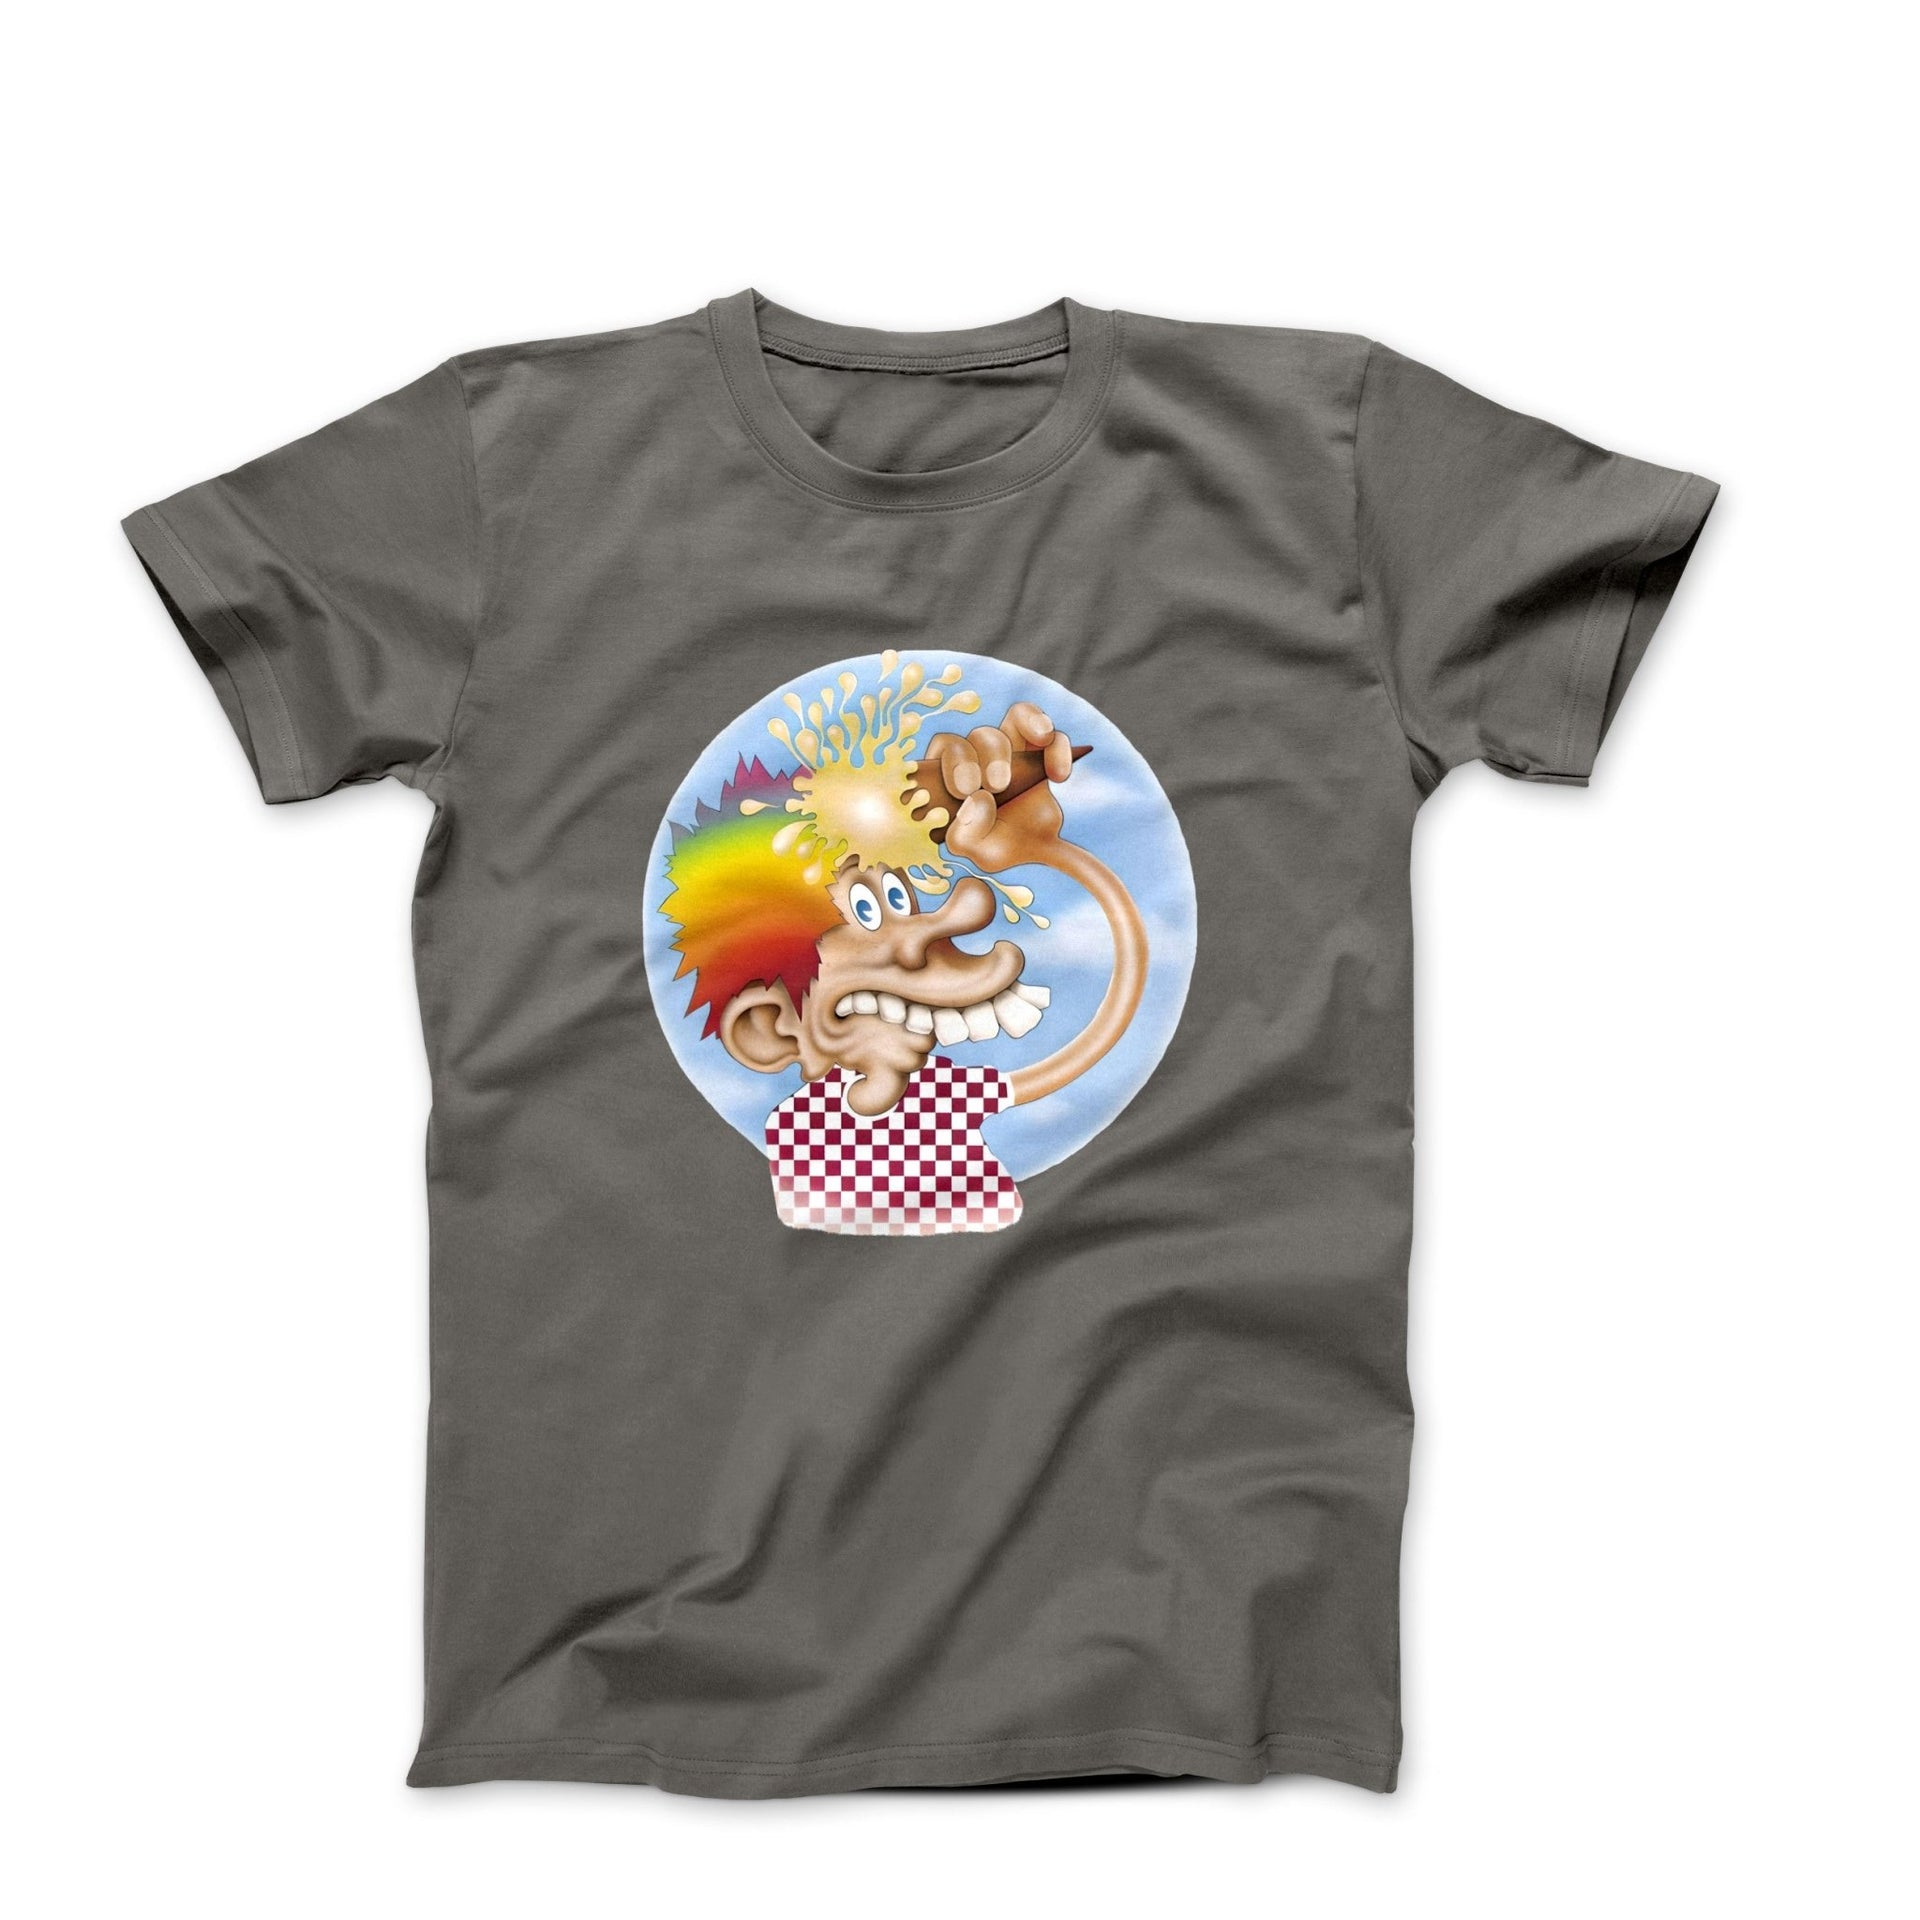 Grateful Dead Truckin' Fool (1972) Album Cover T-shirt - Clothing - Harvey Ltd